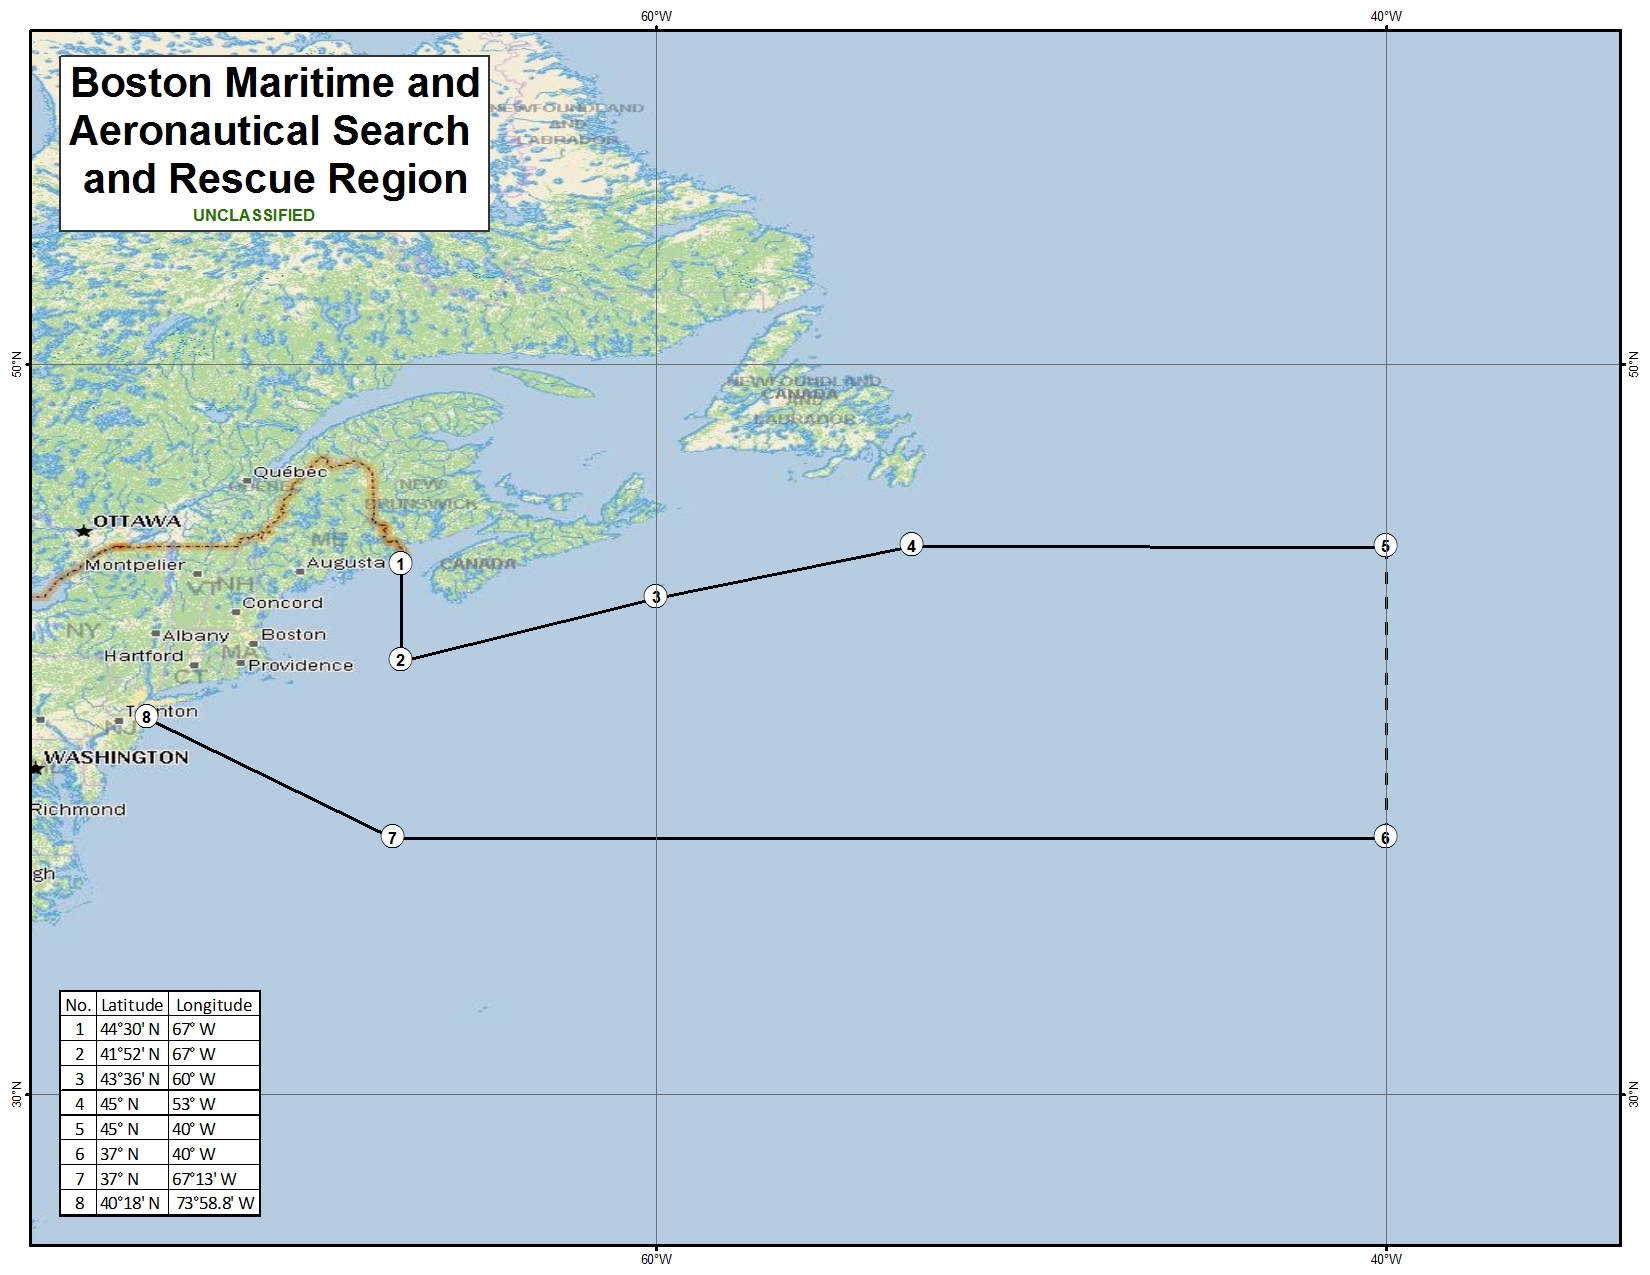 Boston Maritime and Aeronautical Search and Rescue Region